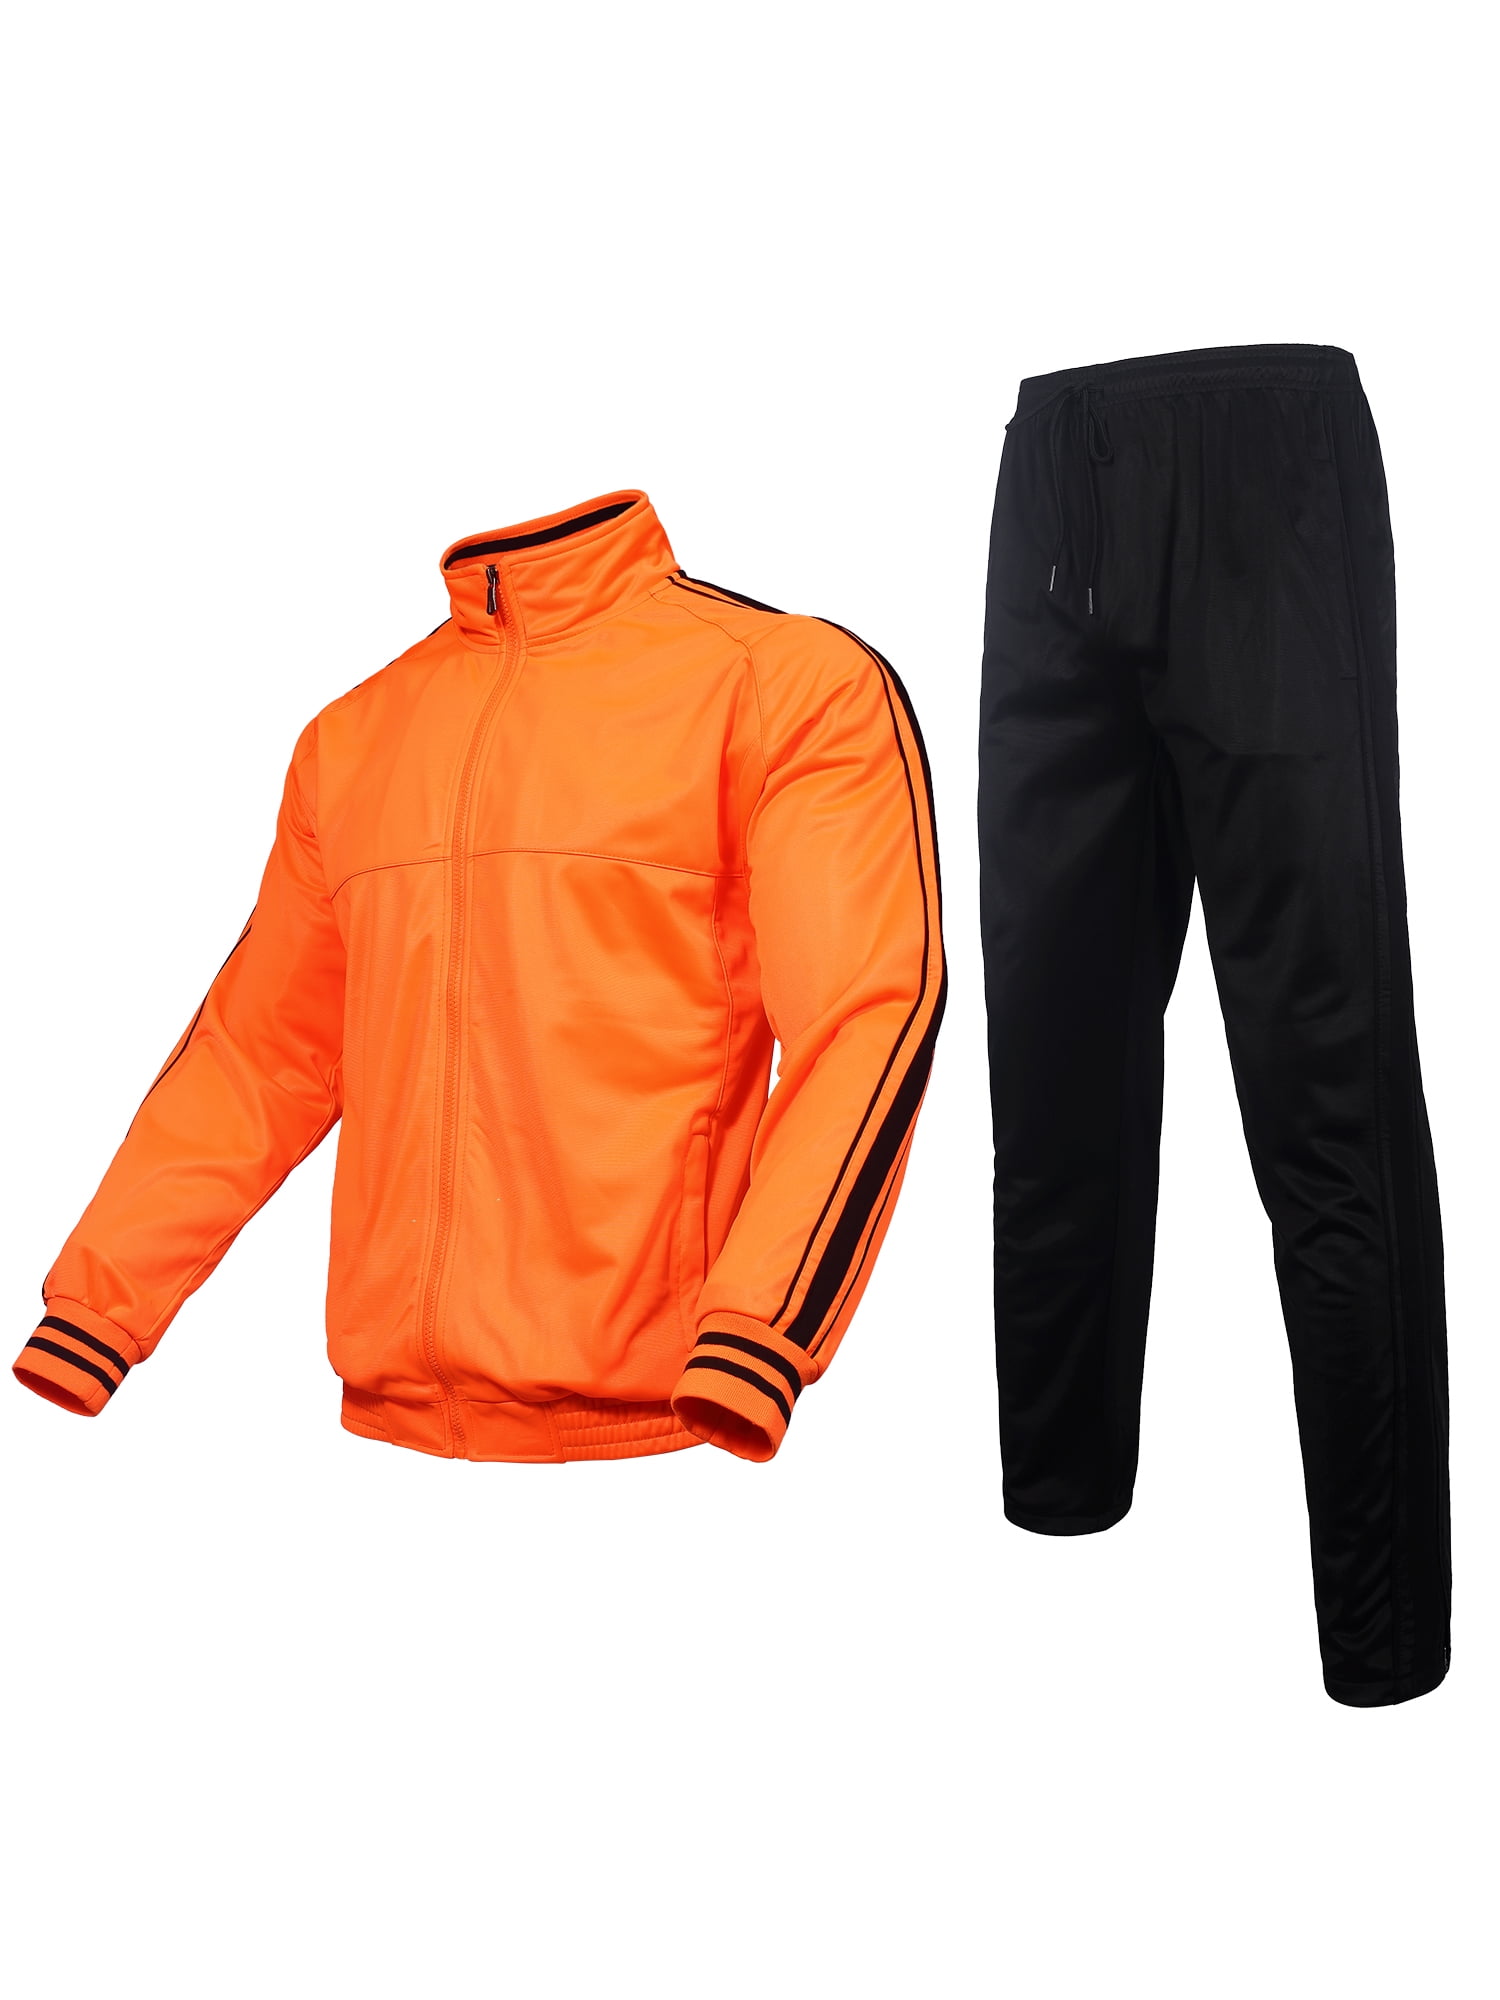 Men's Tracksuits Sports Lightweight Full Zip Jogging Suits Sweatsuit ...